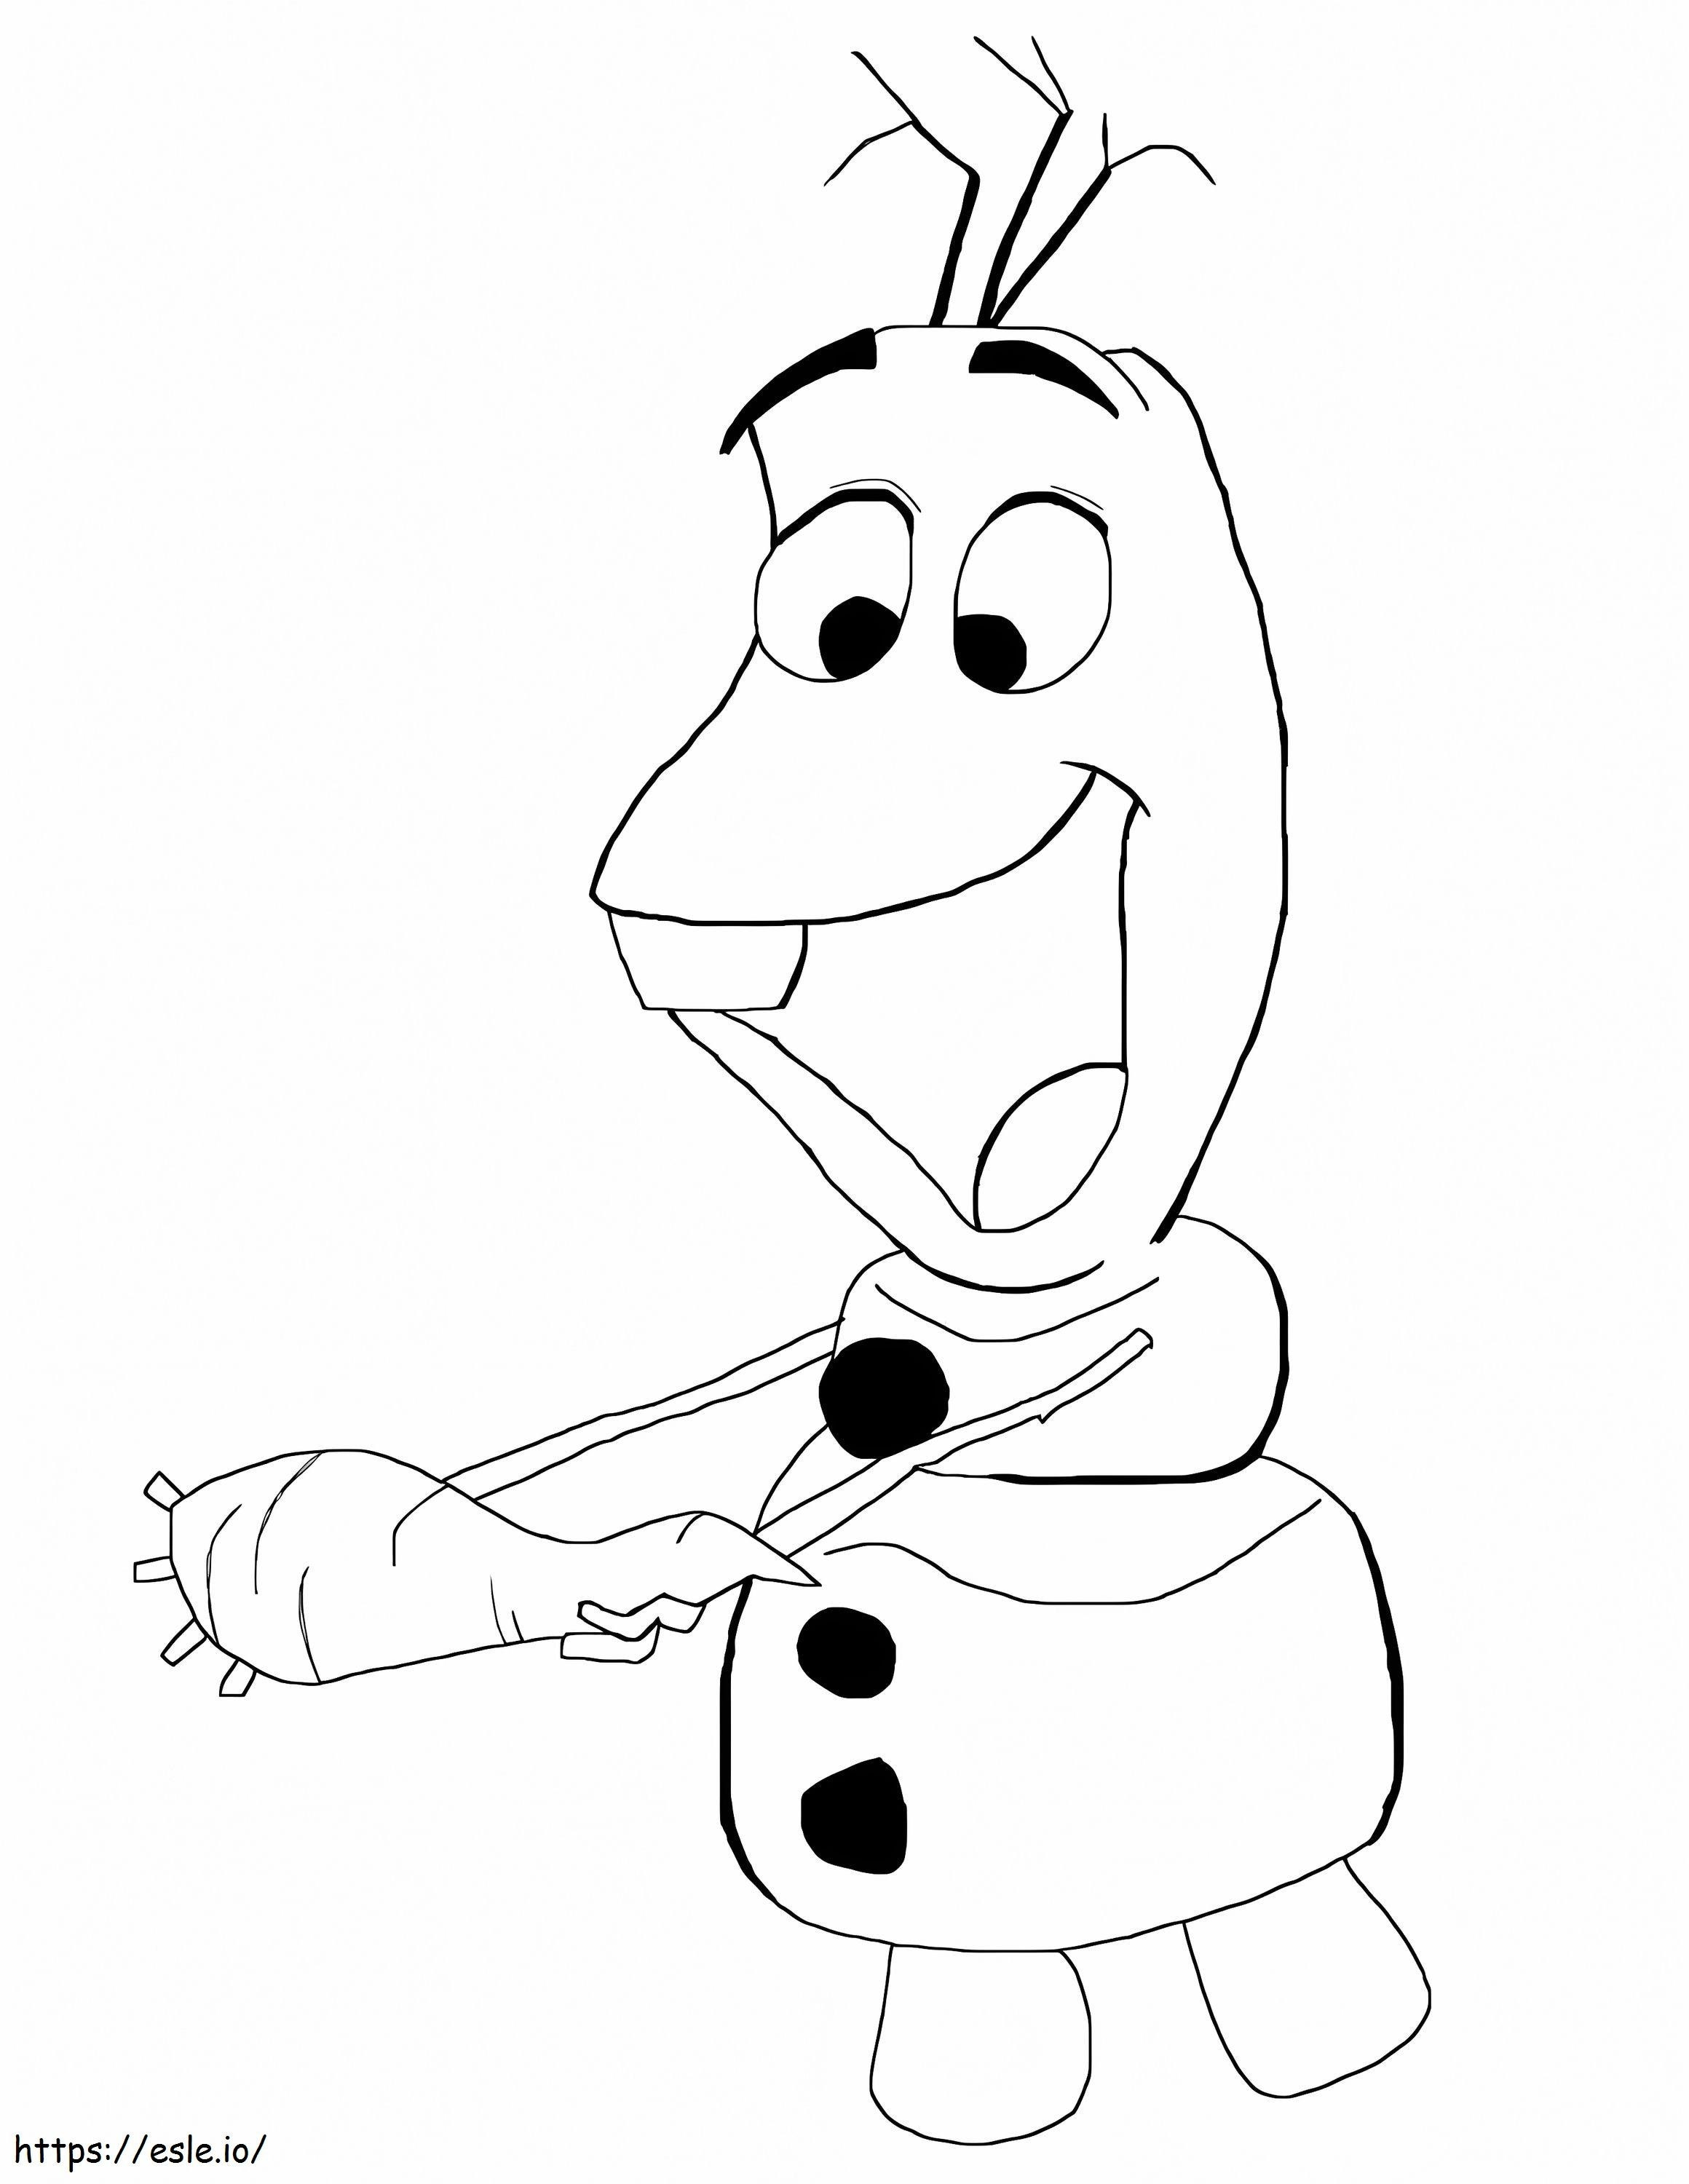 Disney Olaf ausmalbilder